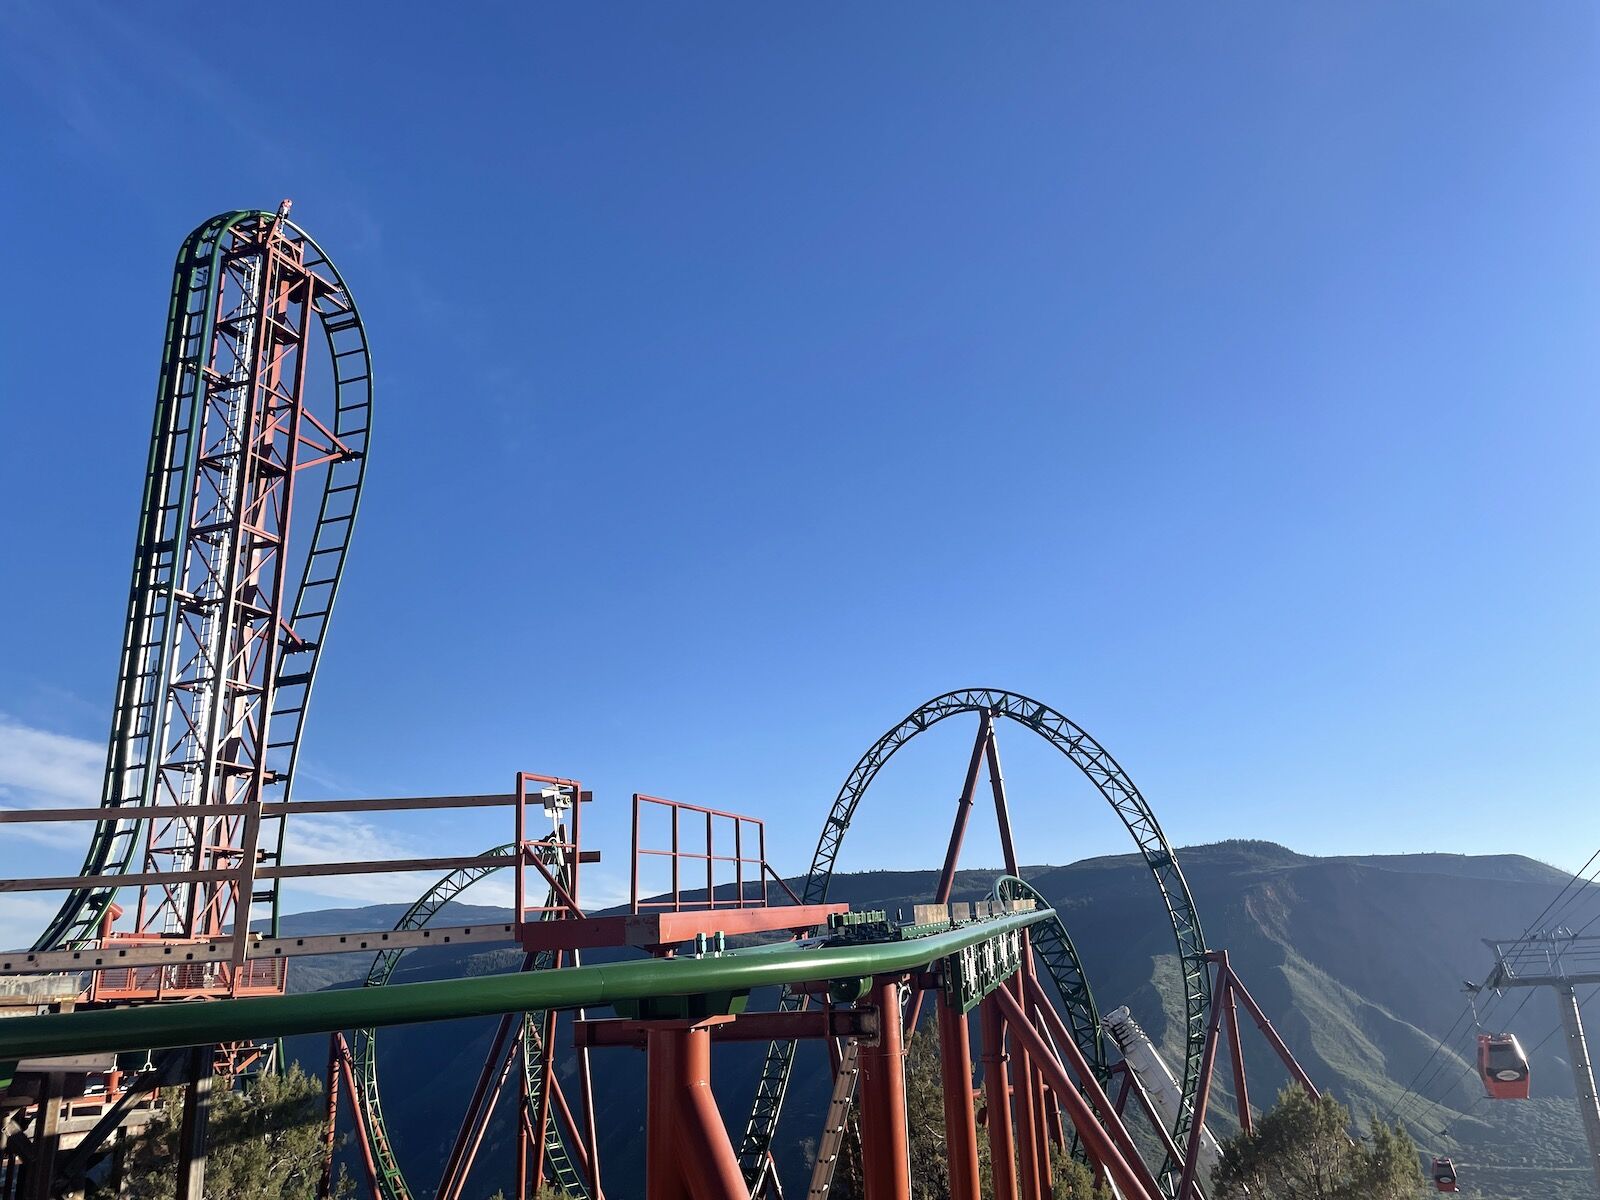 defiance rollercoast at glenwood cavern amusement park in colorado